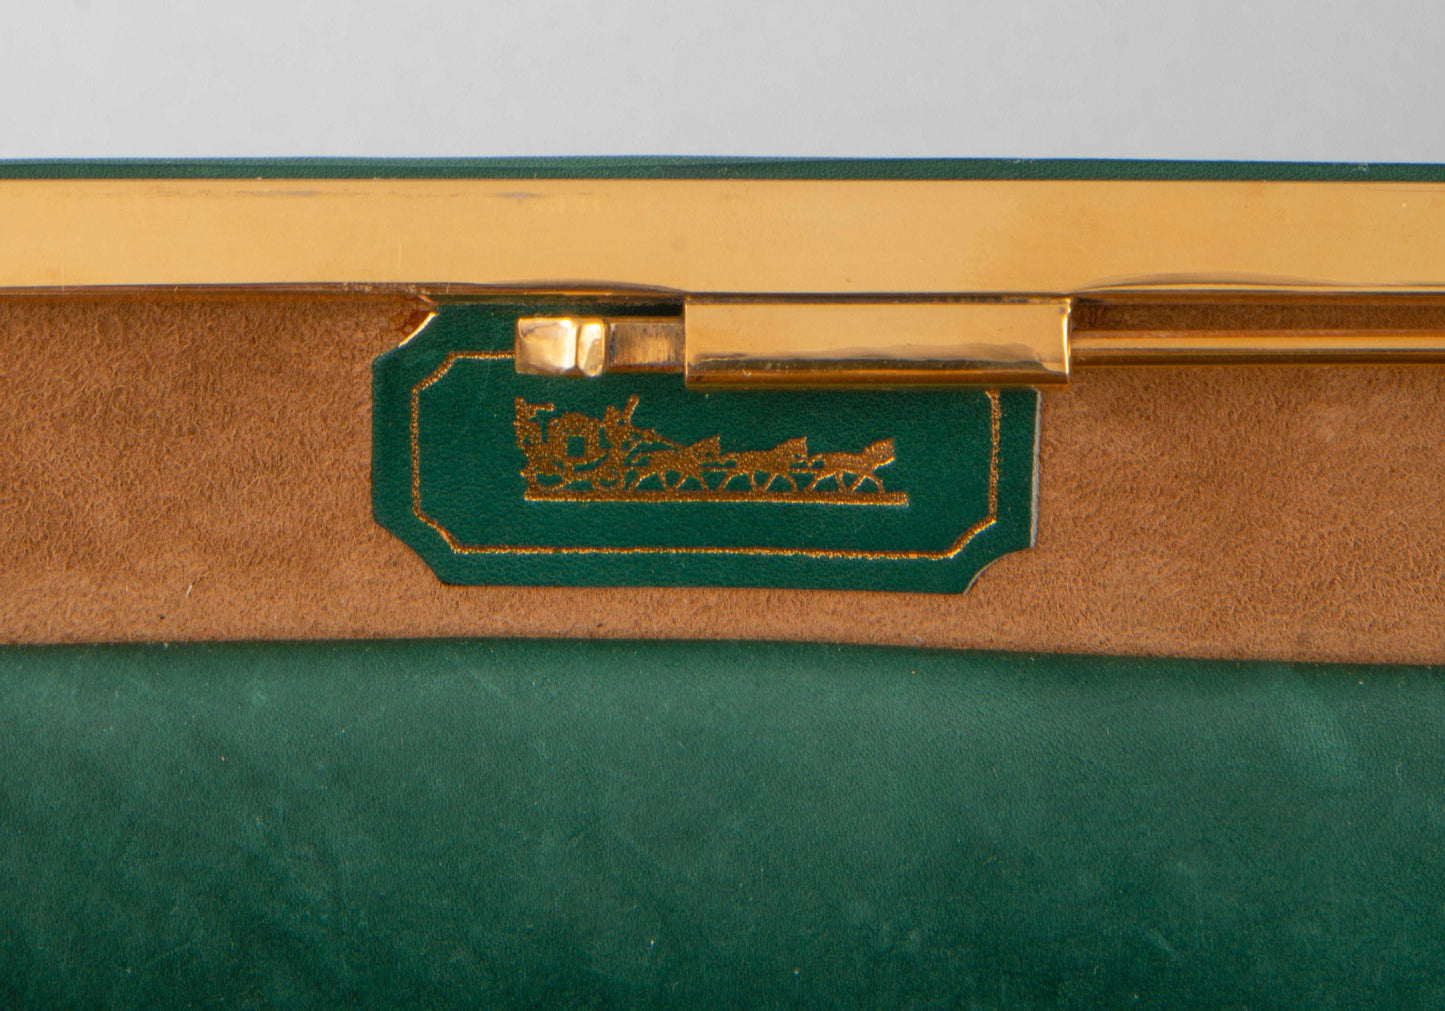 Delvaux vintage handbag 1963 – MyDayDayBelgium